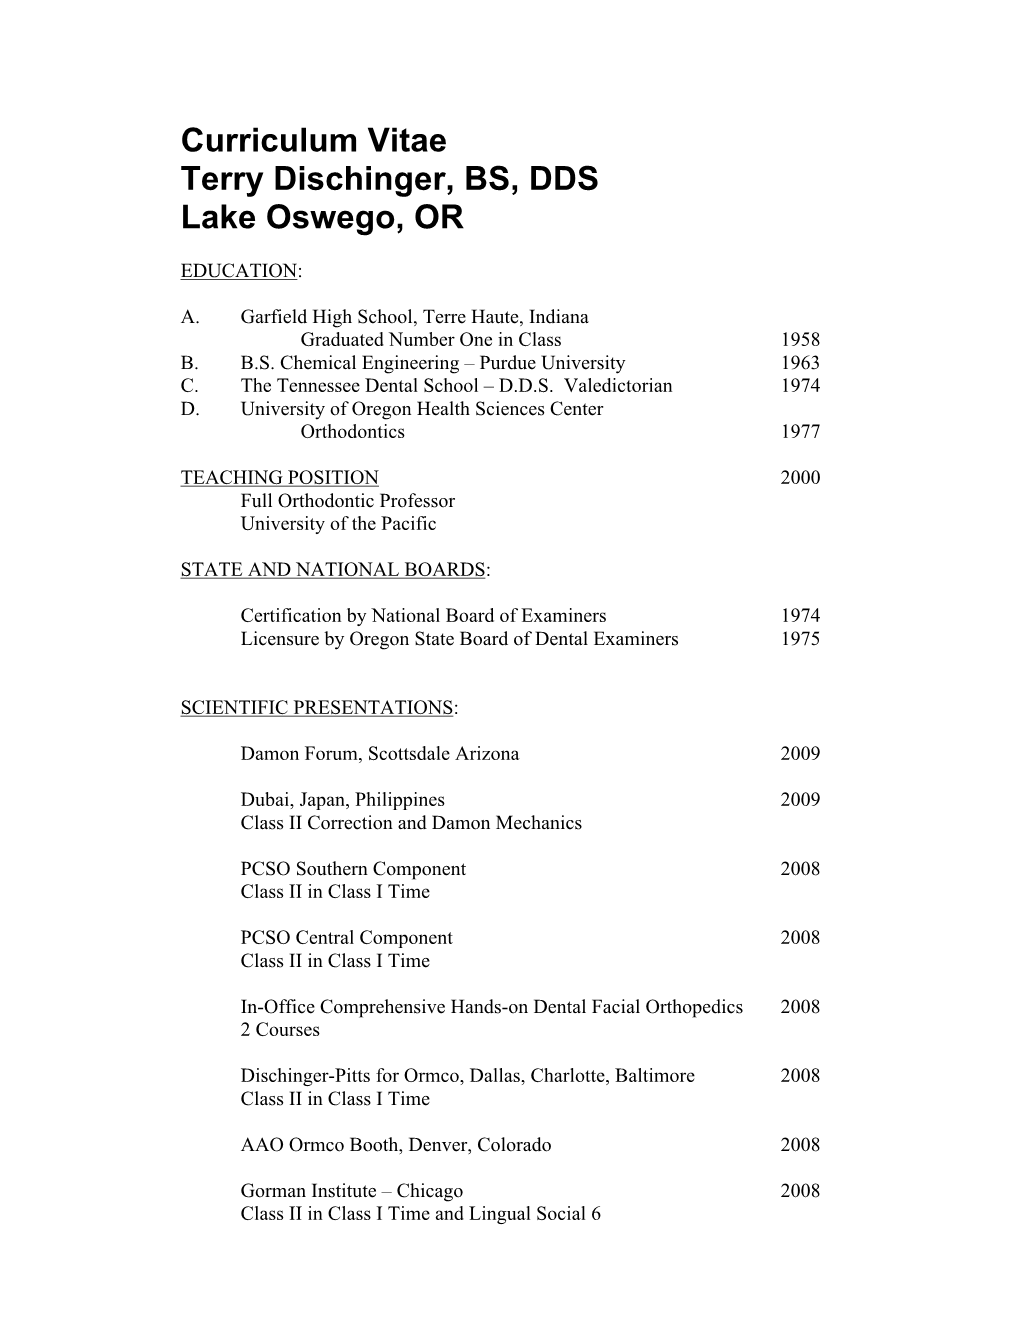 Curriculum Vitae Terry Dischinger, BS, DDS Lake Oswego, OR